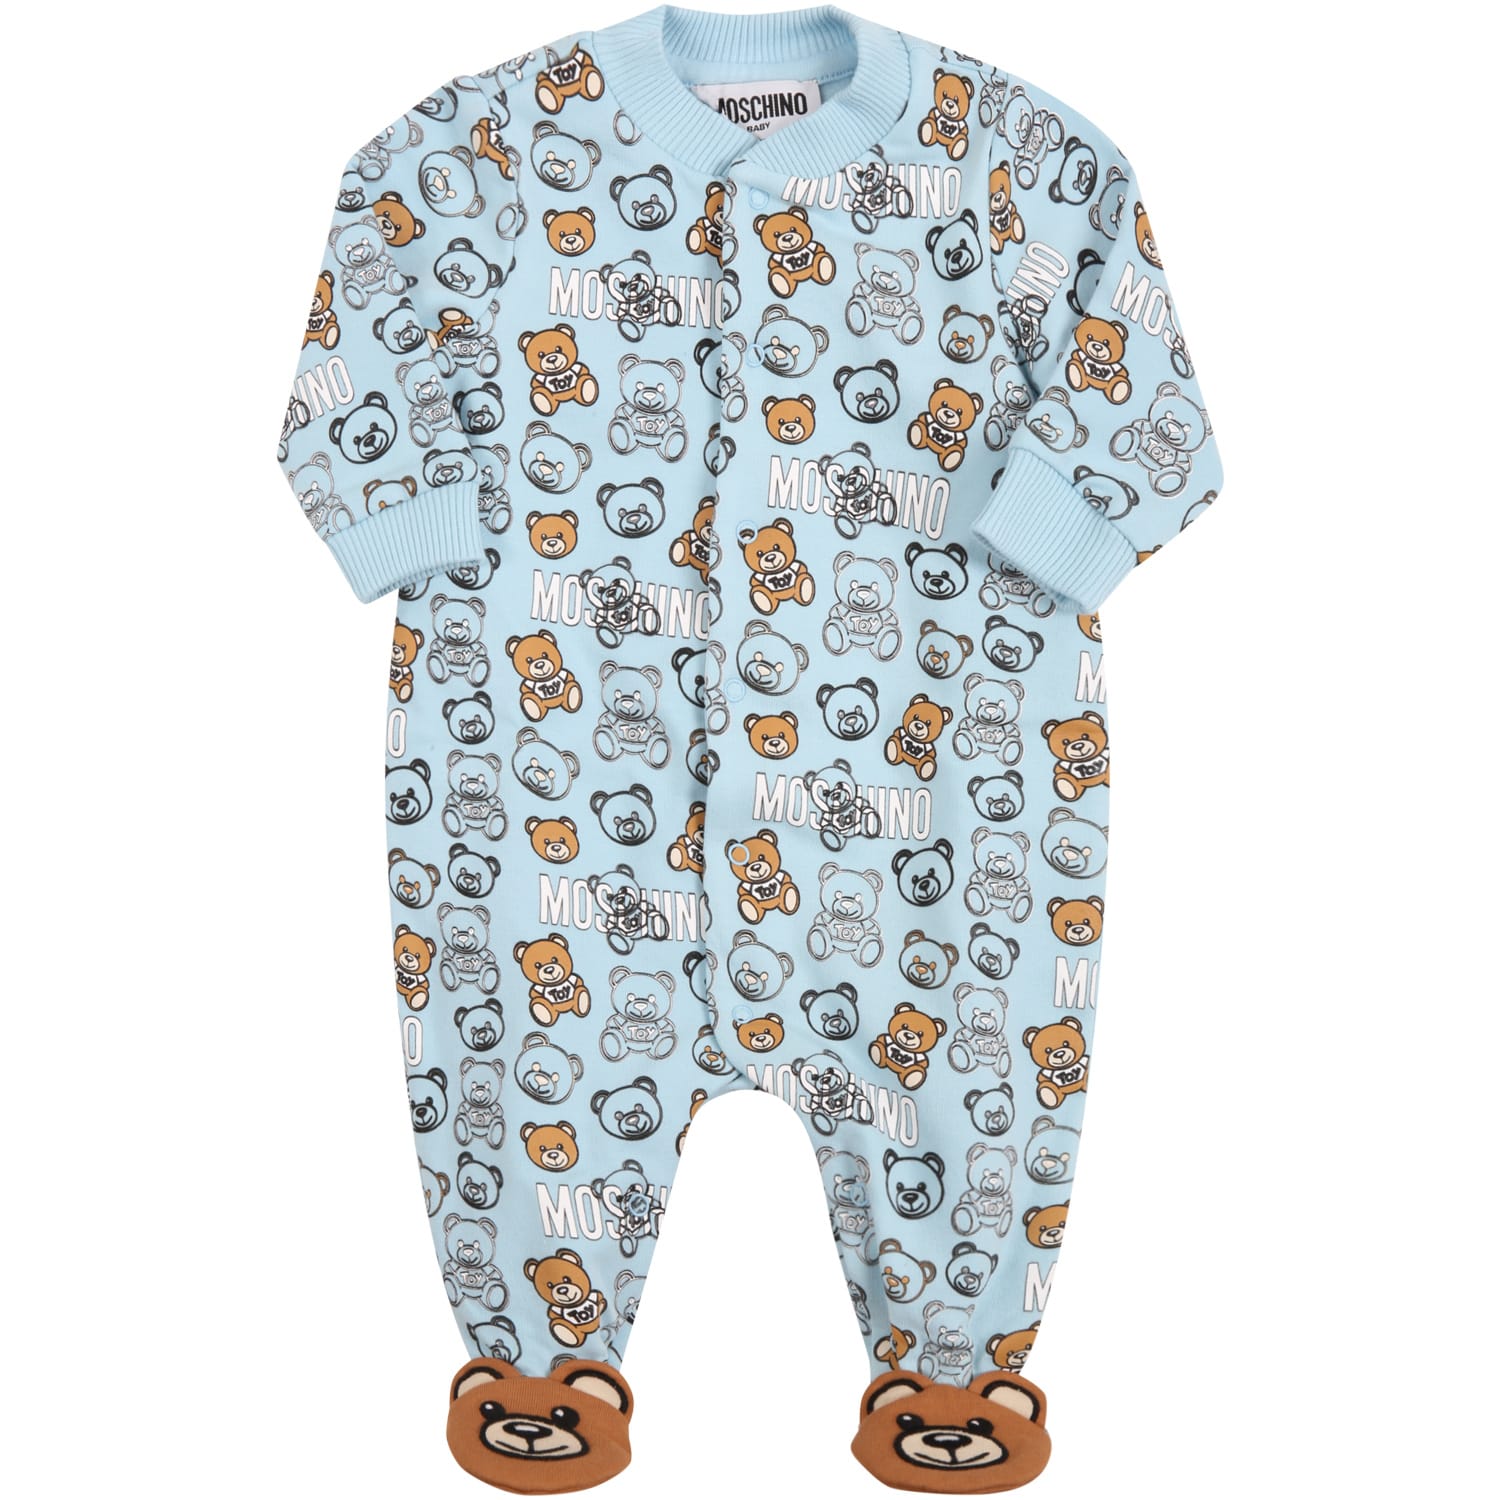 Moschino Light Blue Babygrow For Baby Boy With Teddy Bears